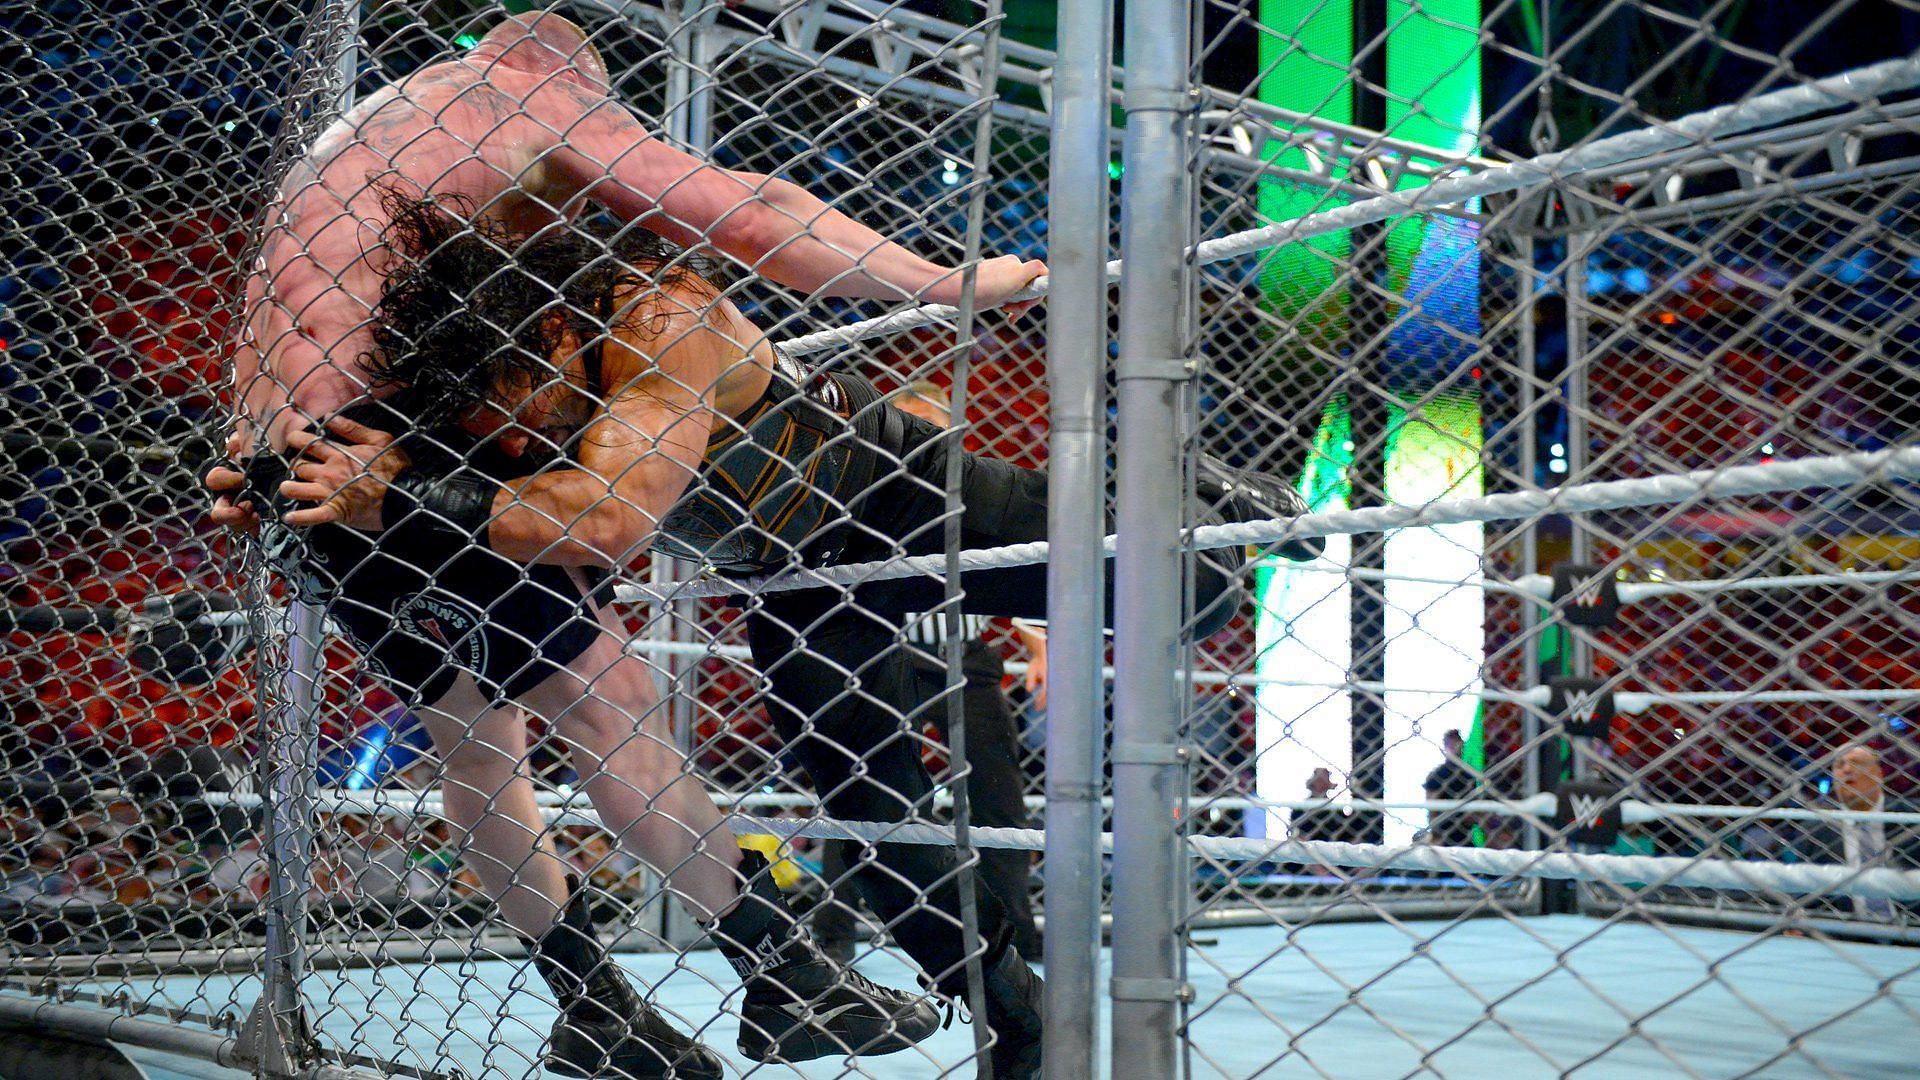 Many huge showdowns have taken place inside the unforgiving steel cage.